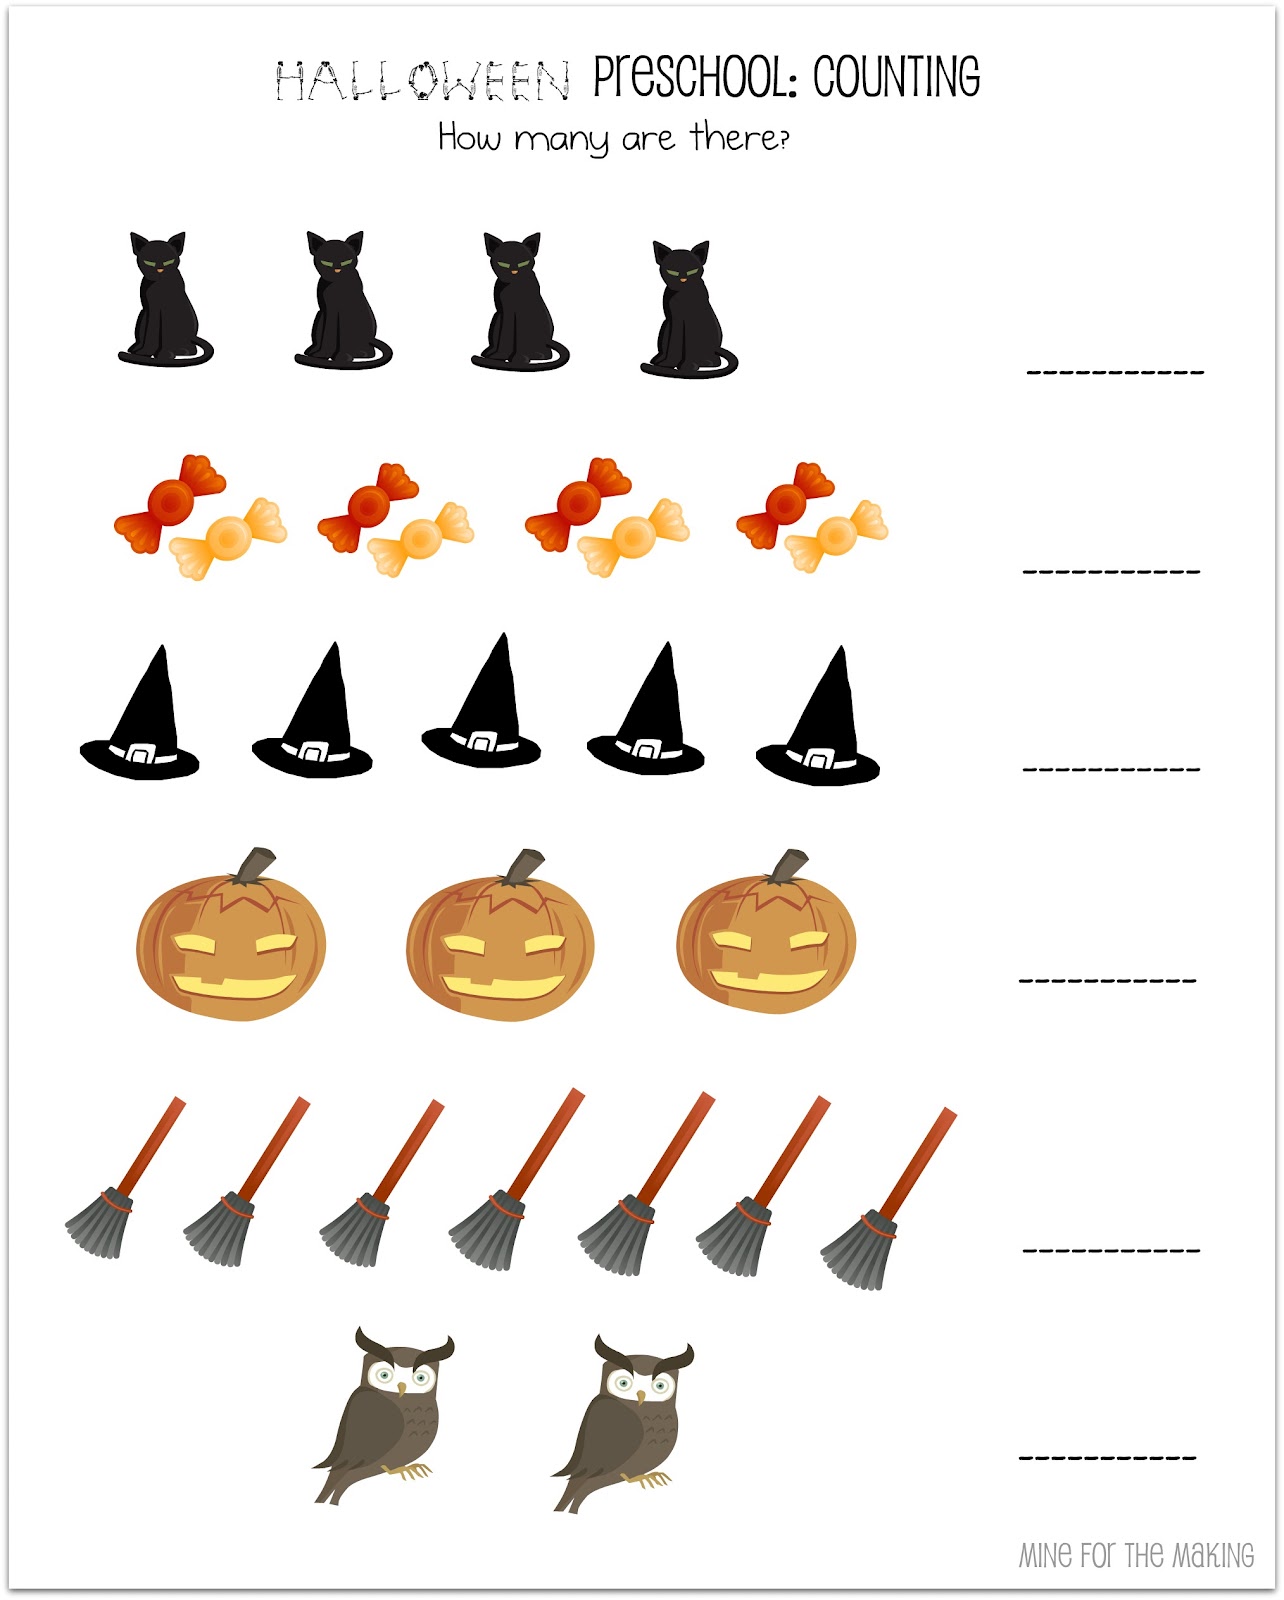 480 New preschool worksheet halloween 821 Halloween Week: Halloween Preschool Printables   Mine for the Making 